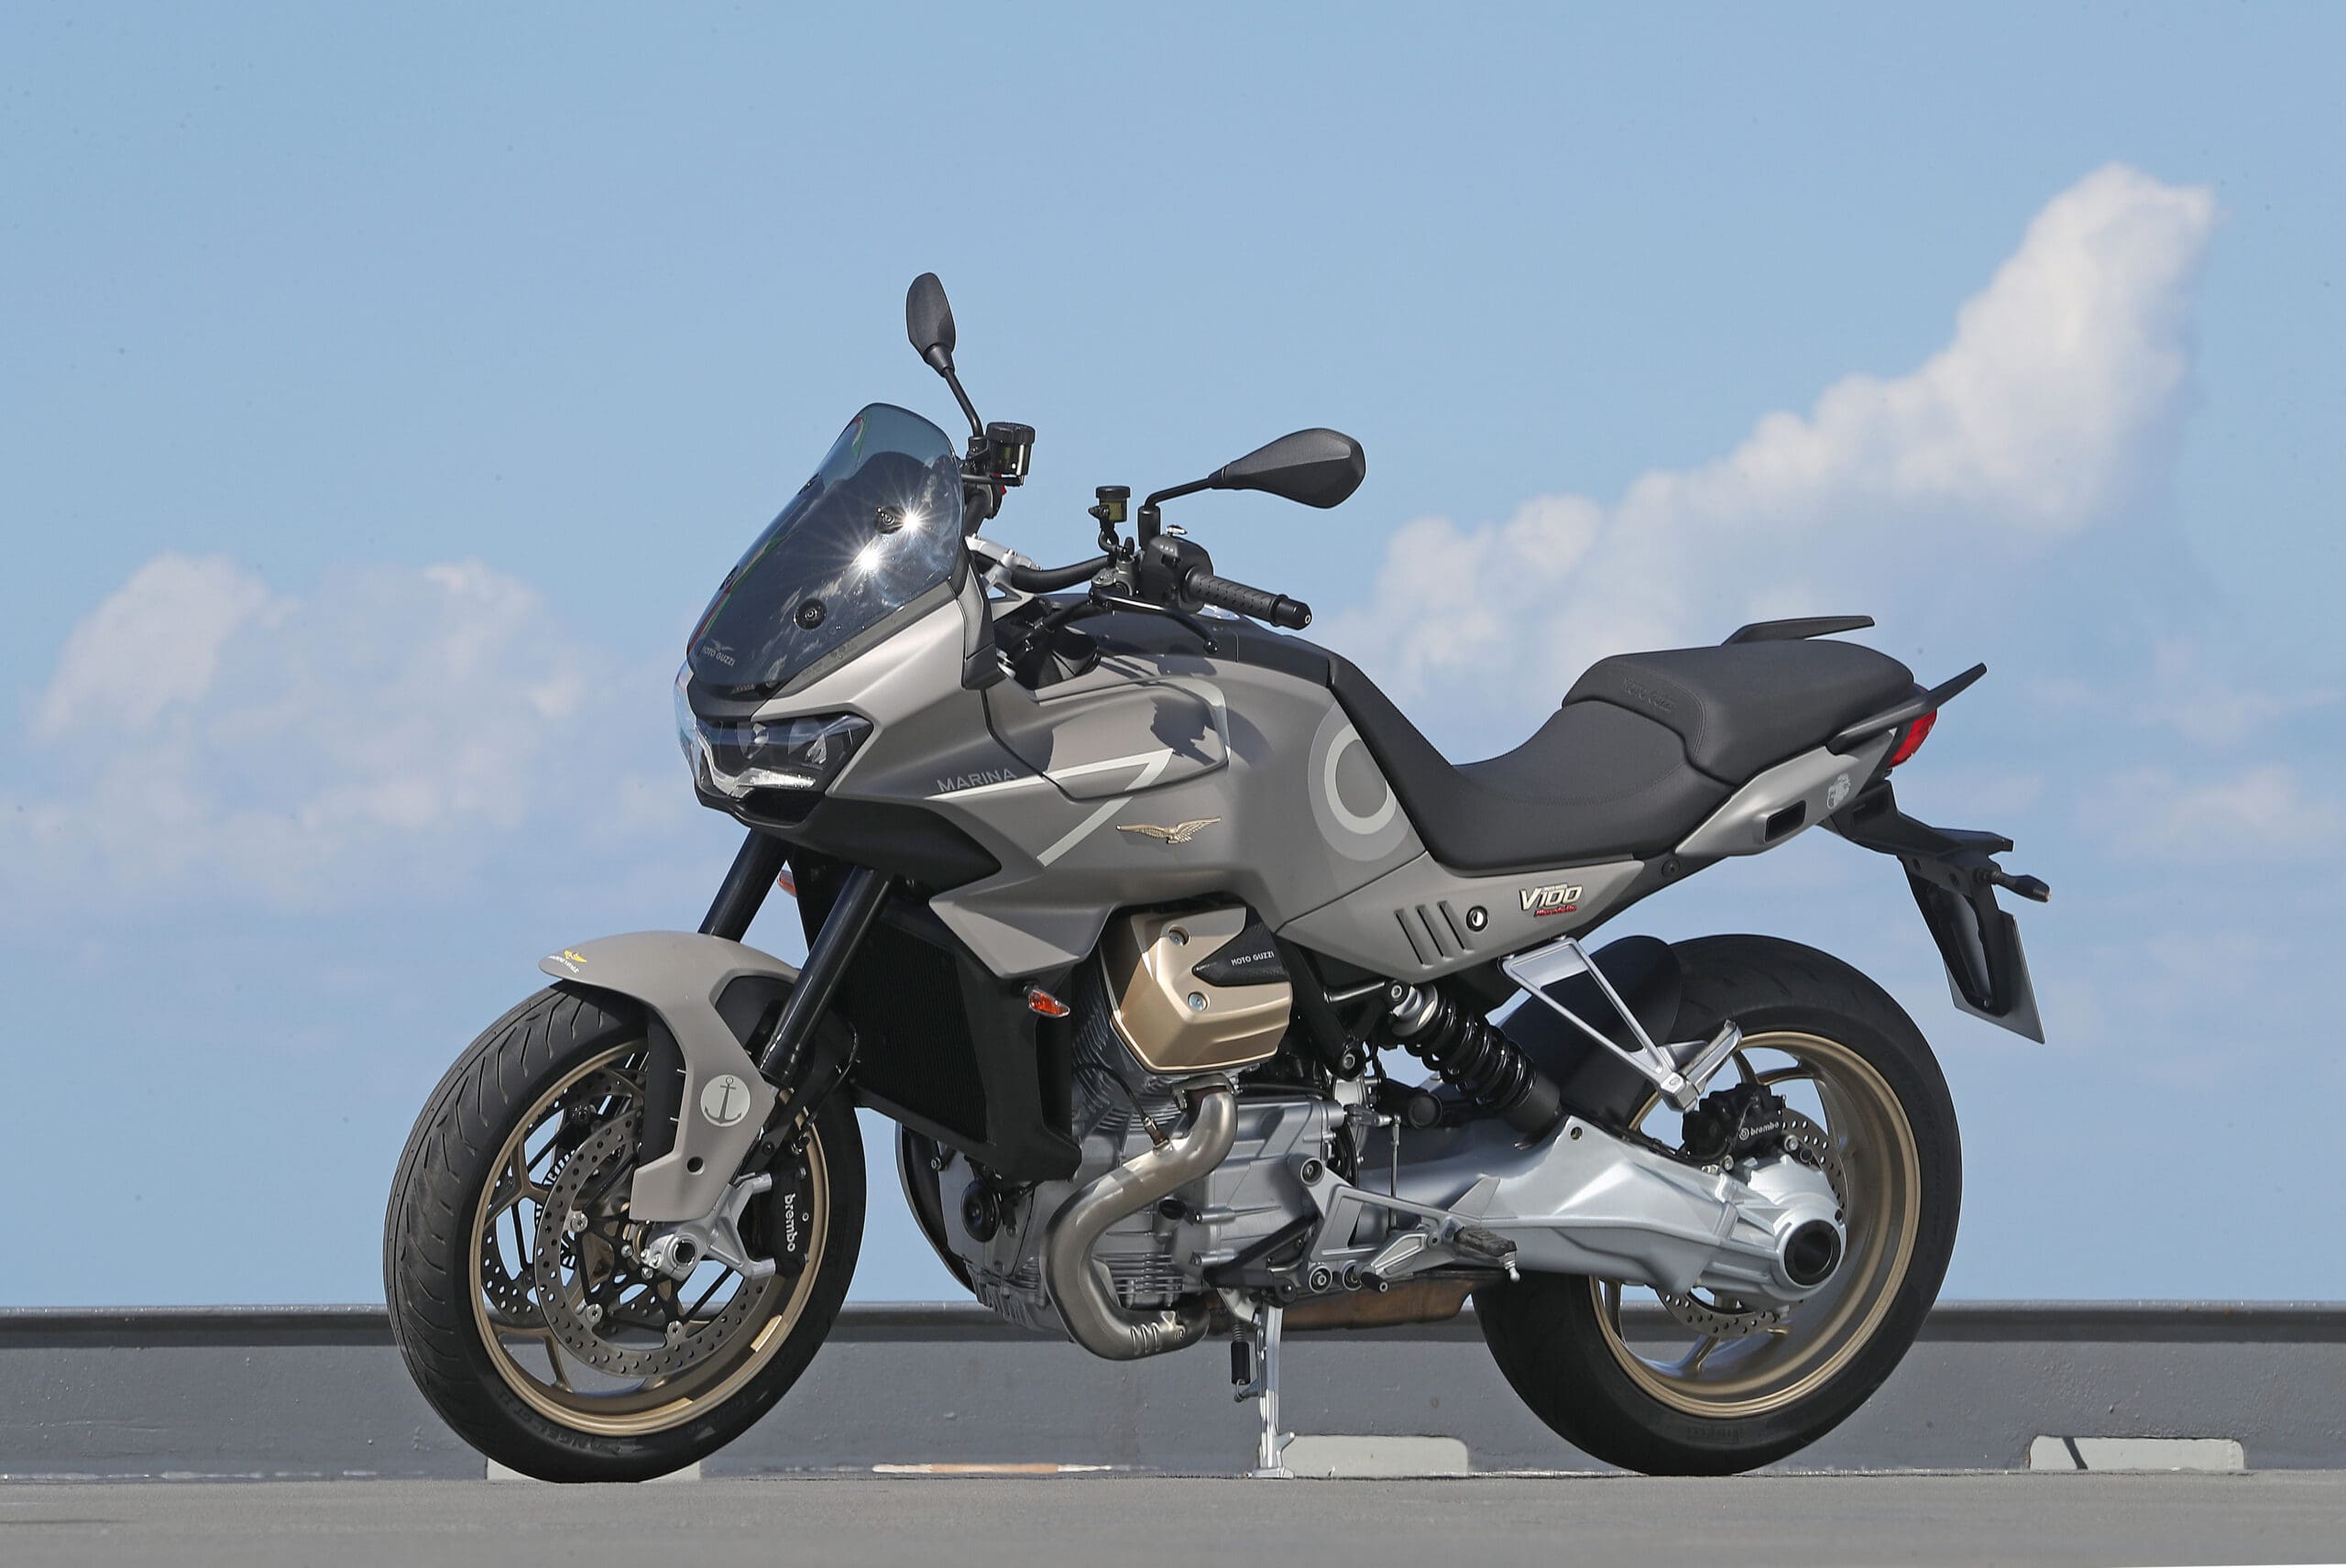 Moto Guzzi特别版V100 Mandello Aviazione Navale。媒体来源自Moto Guzzi的新闻稿。